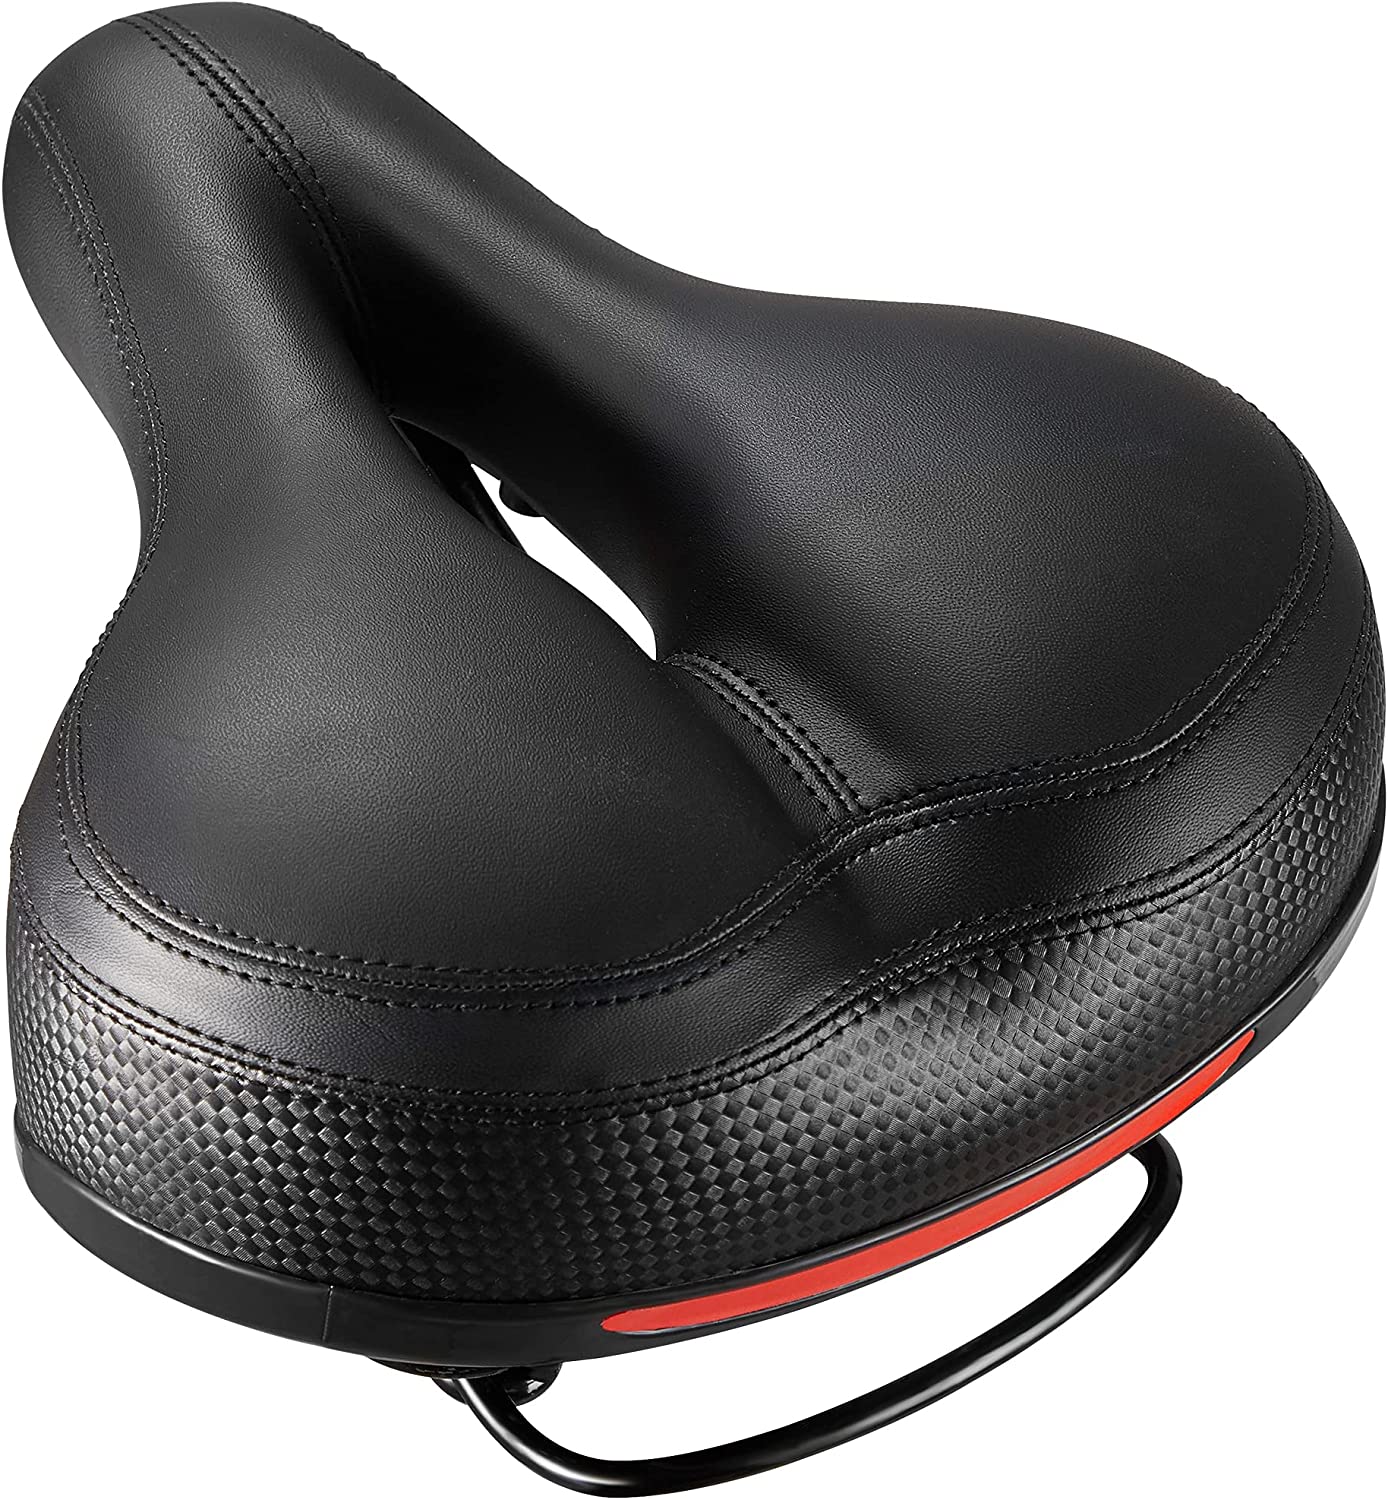 Puroma Comfort Bike Seat Dual Spring Designed